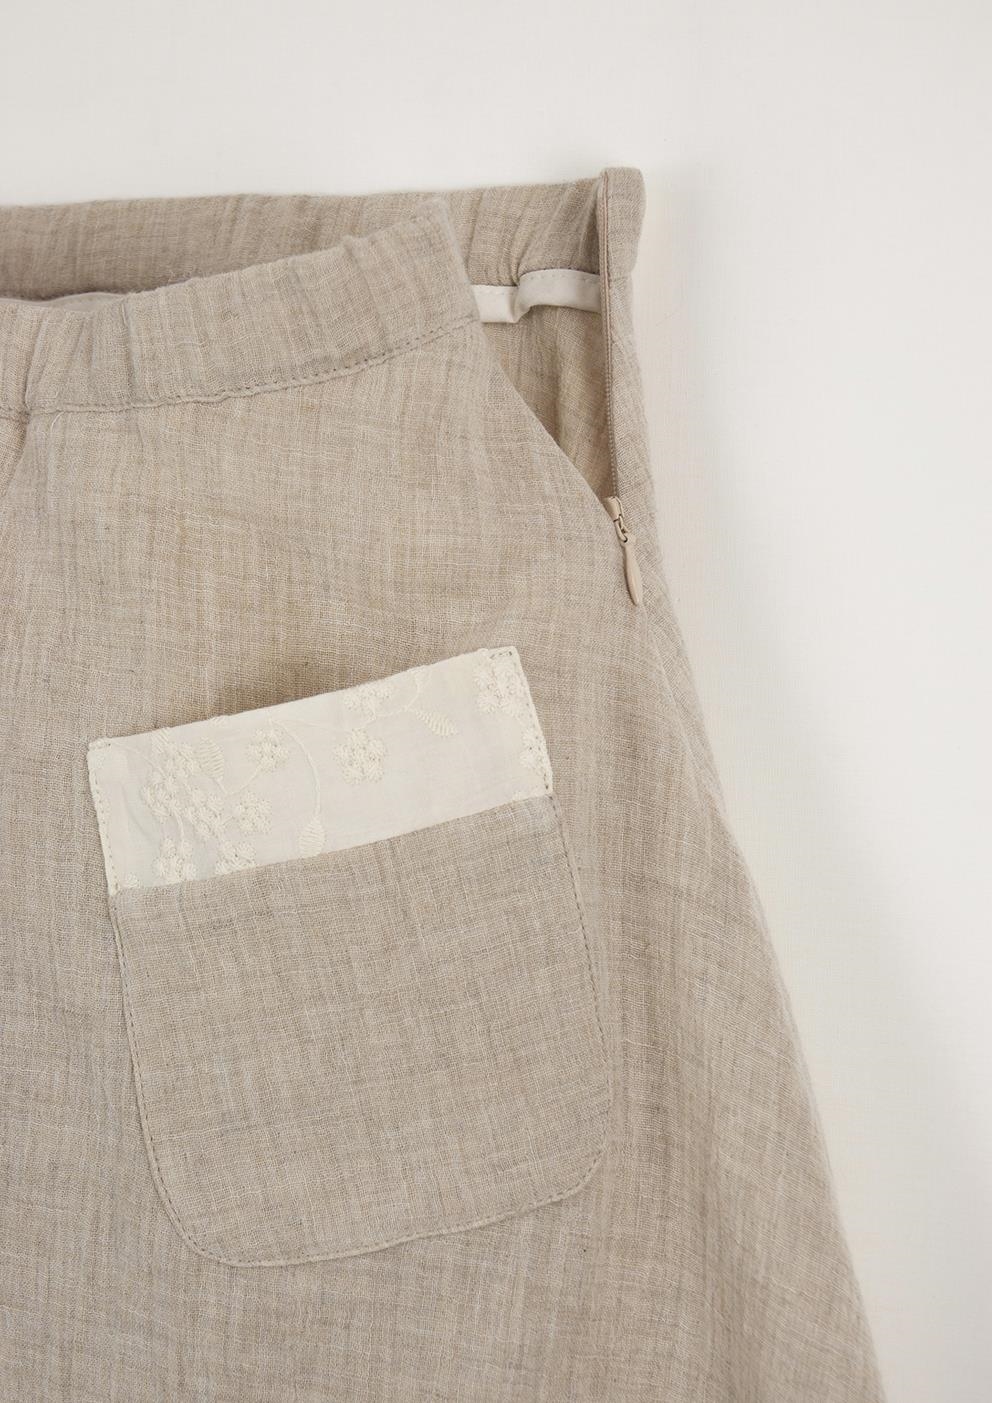 Mod.19.3 Sand skirt with pockets | SS23 Mod.19.3 Sand skirt with pockets